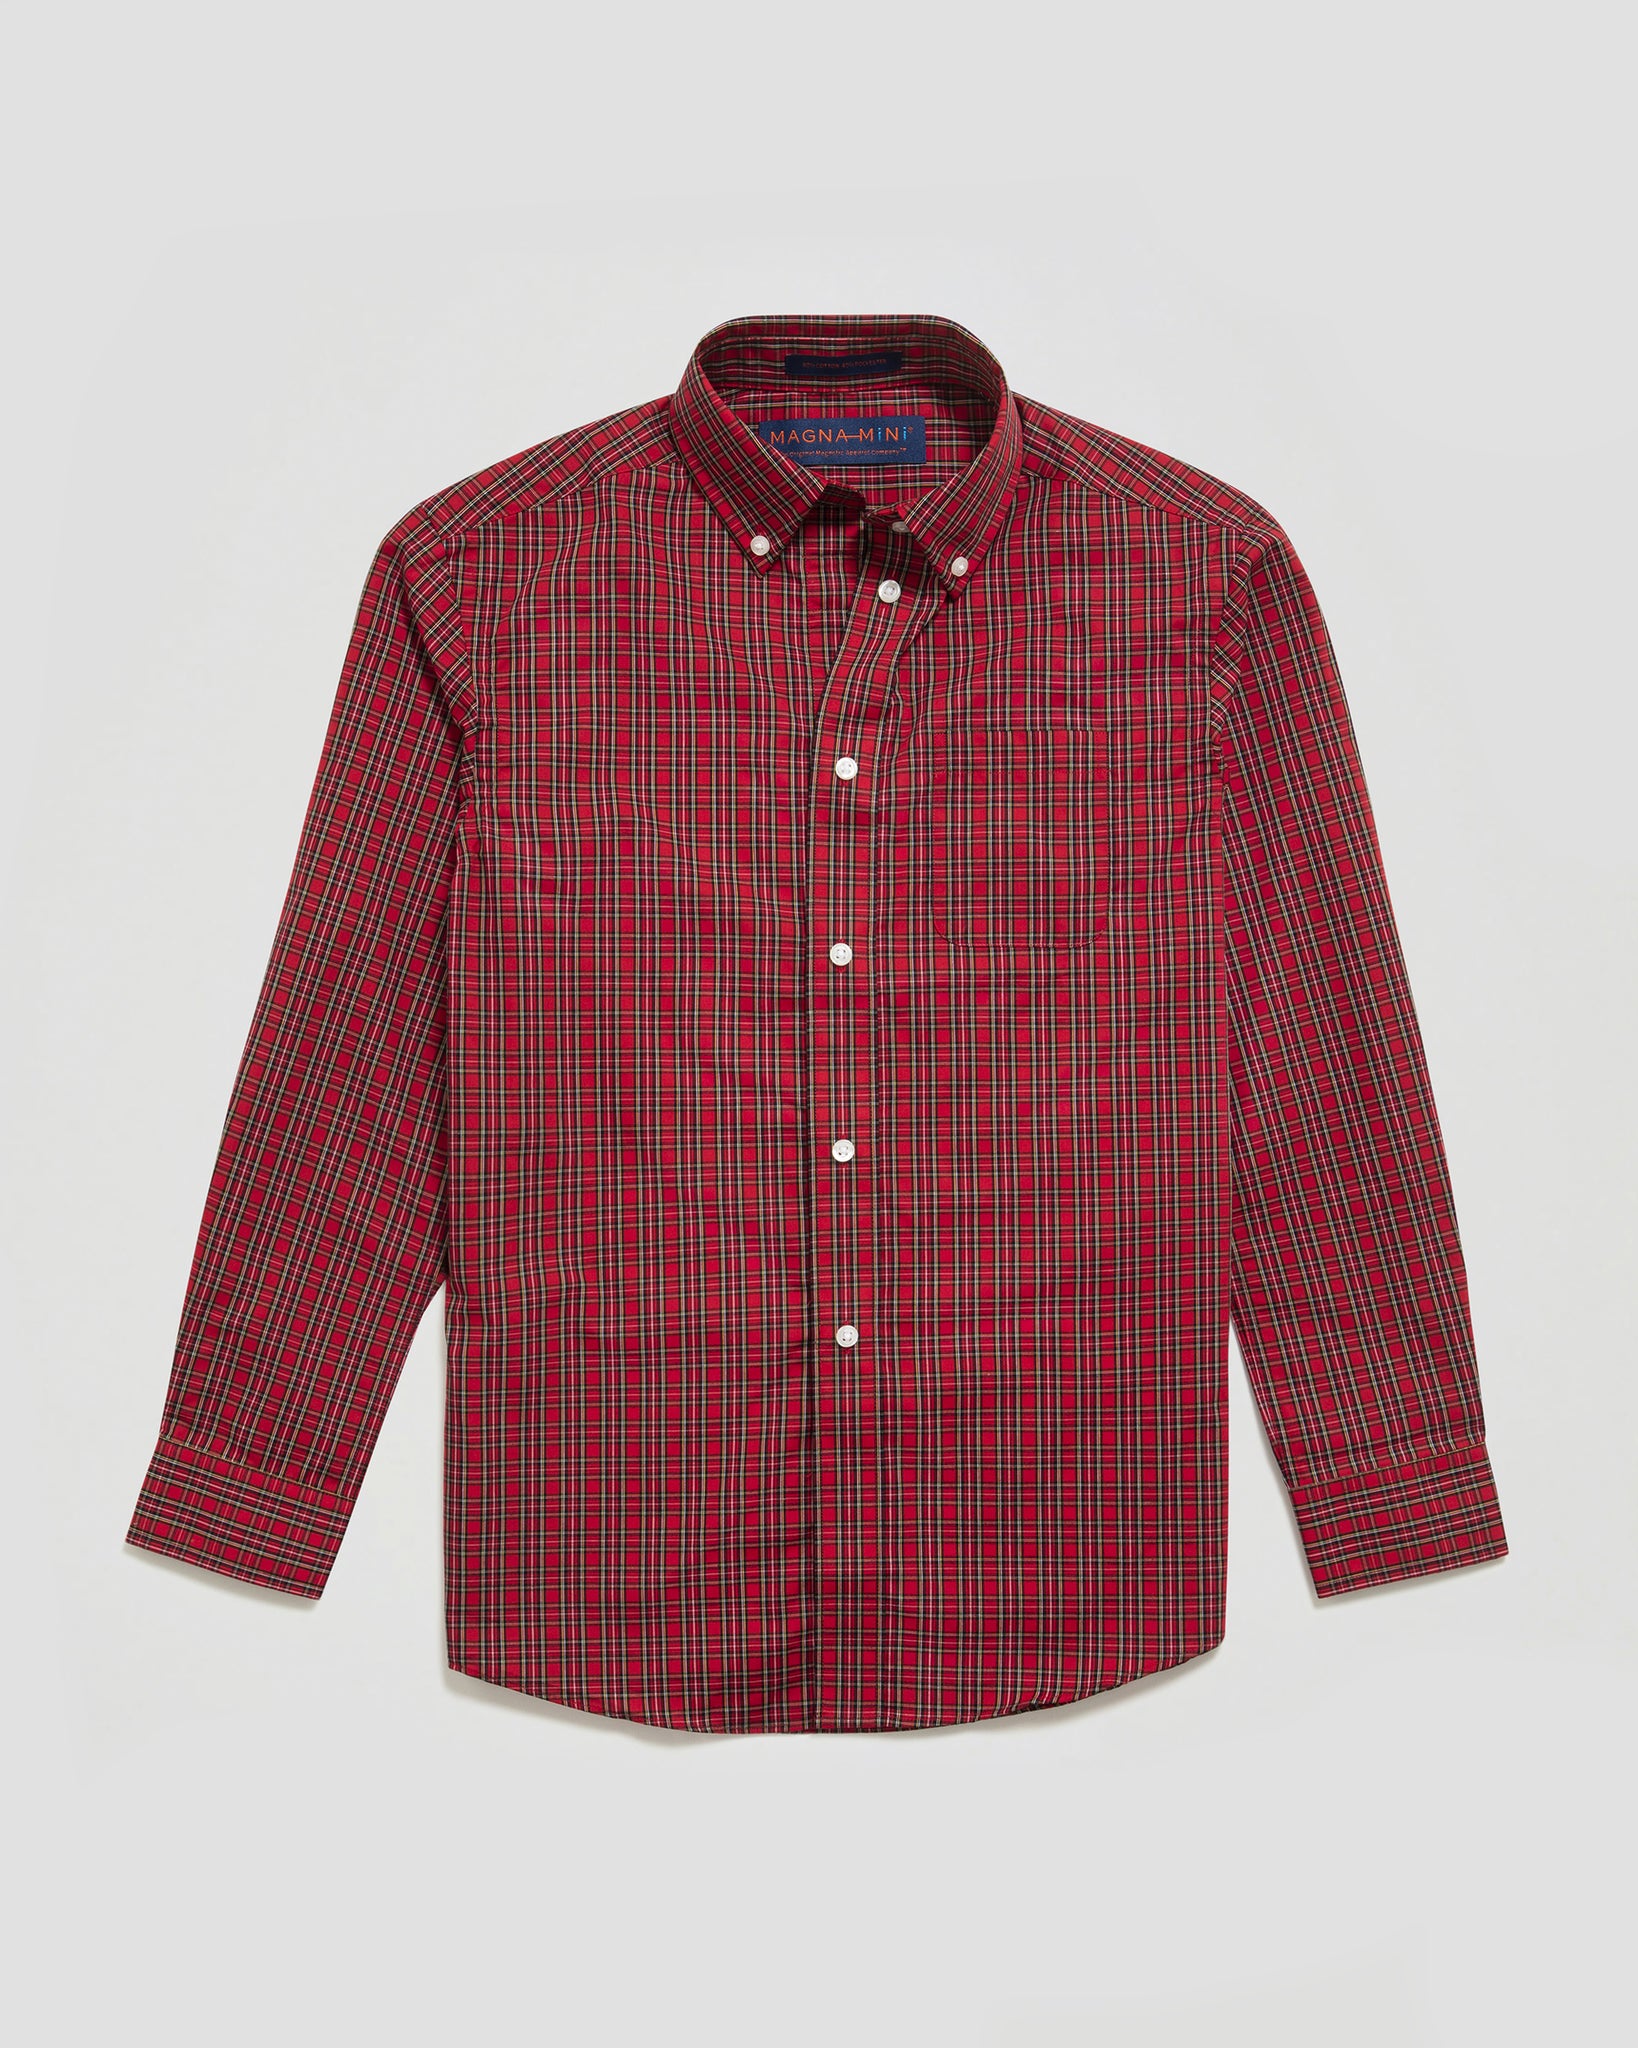 MagnaClick Casual Plaid Shirt (Kids) - Red